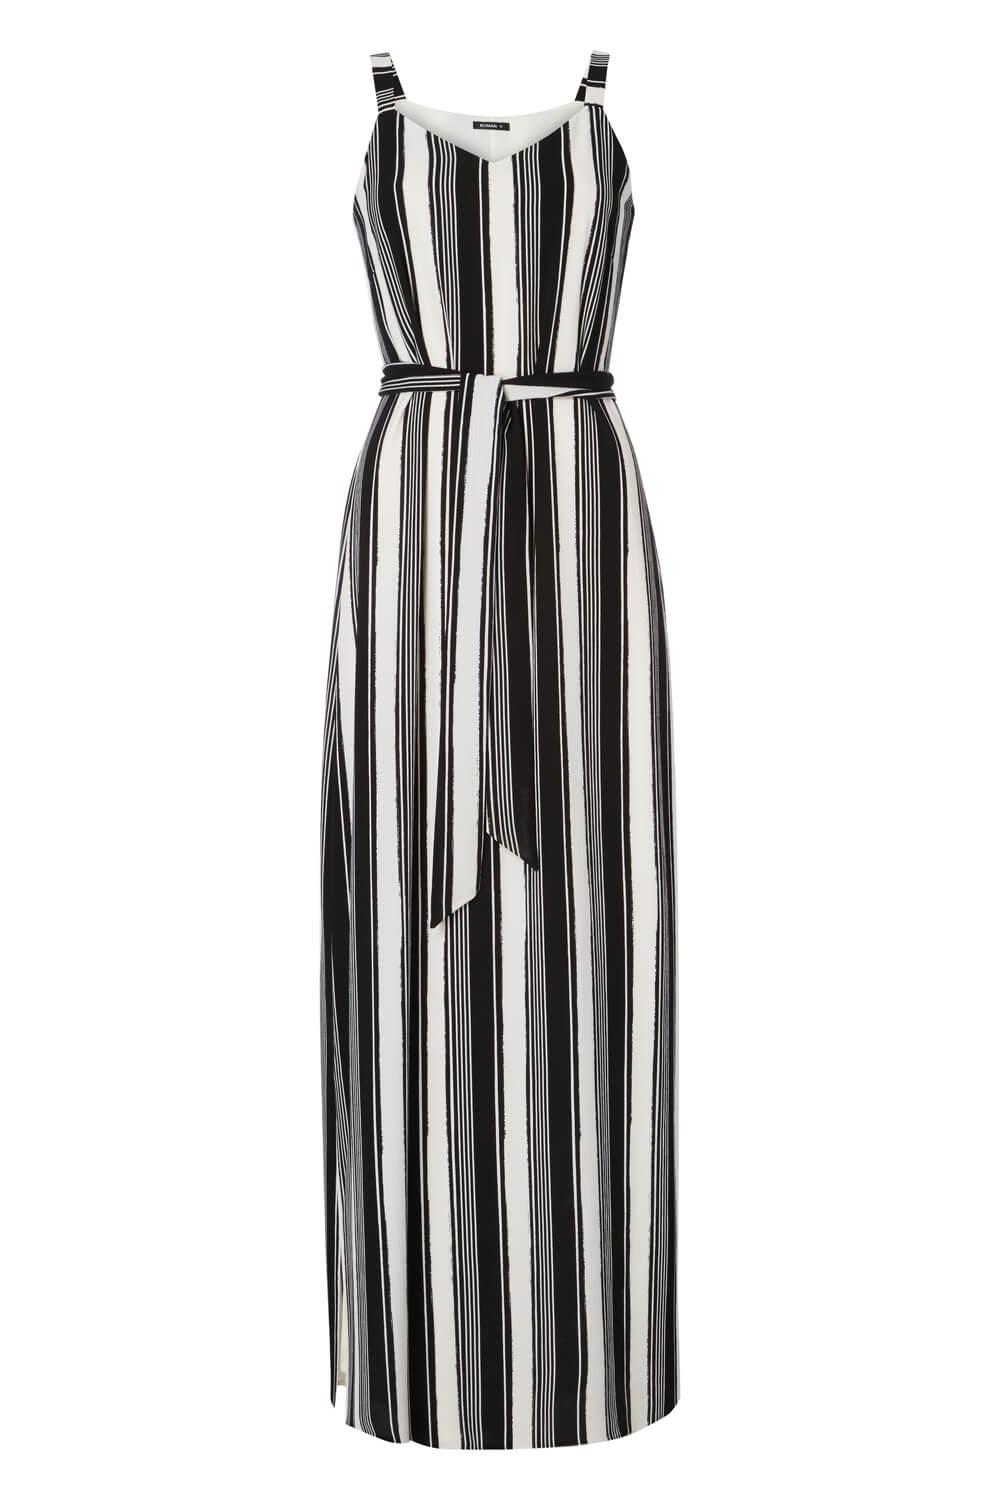 White Monochrome Stripe Maxi Dress, Image 4 of 4